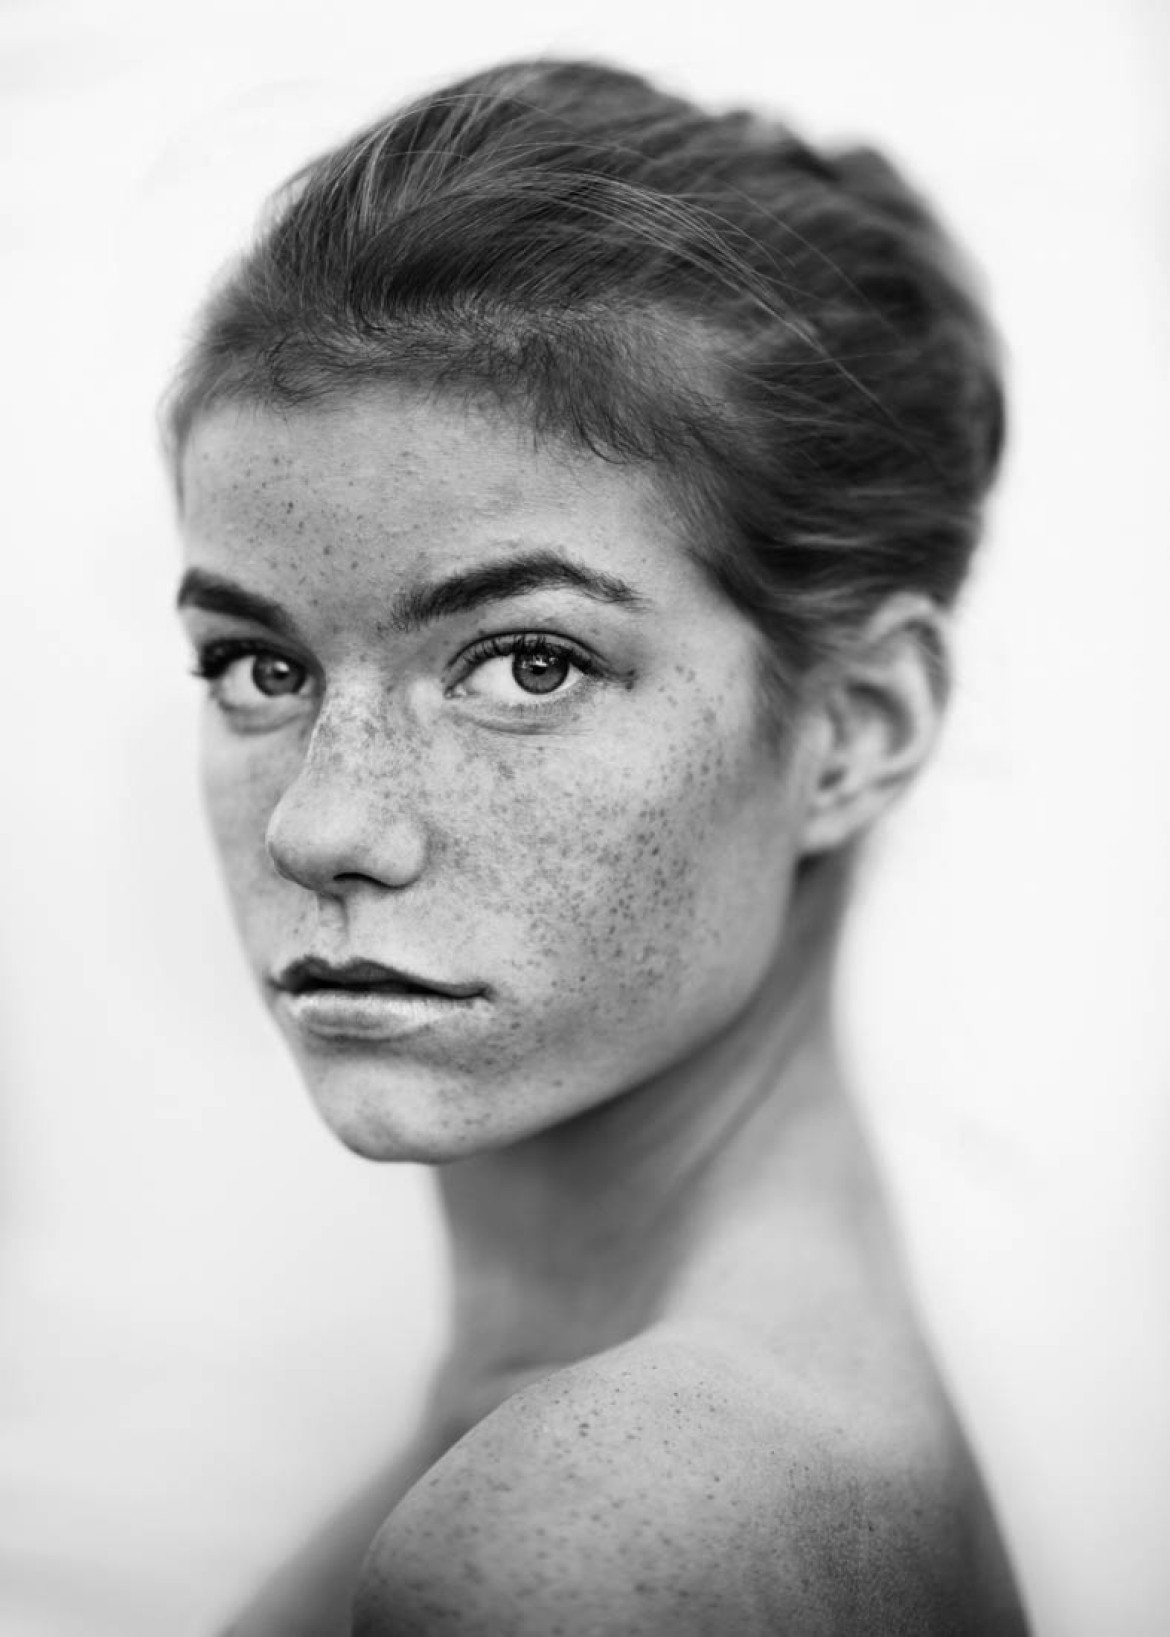 fot. Gabrielle Robinson, z cyklu "Freckles", 2. miejsce w kategorii Portrait / Series